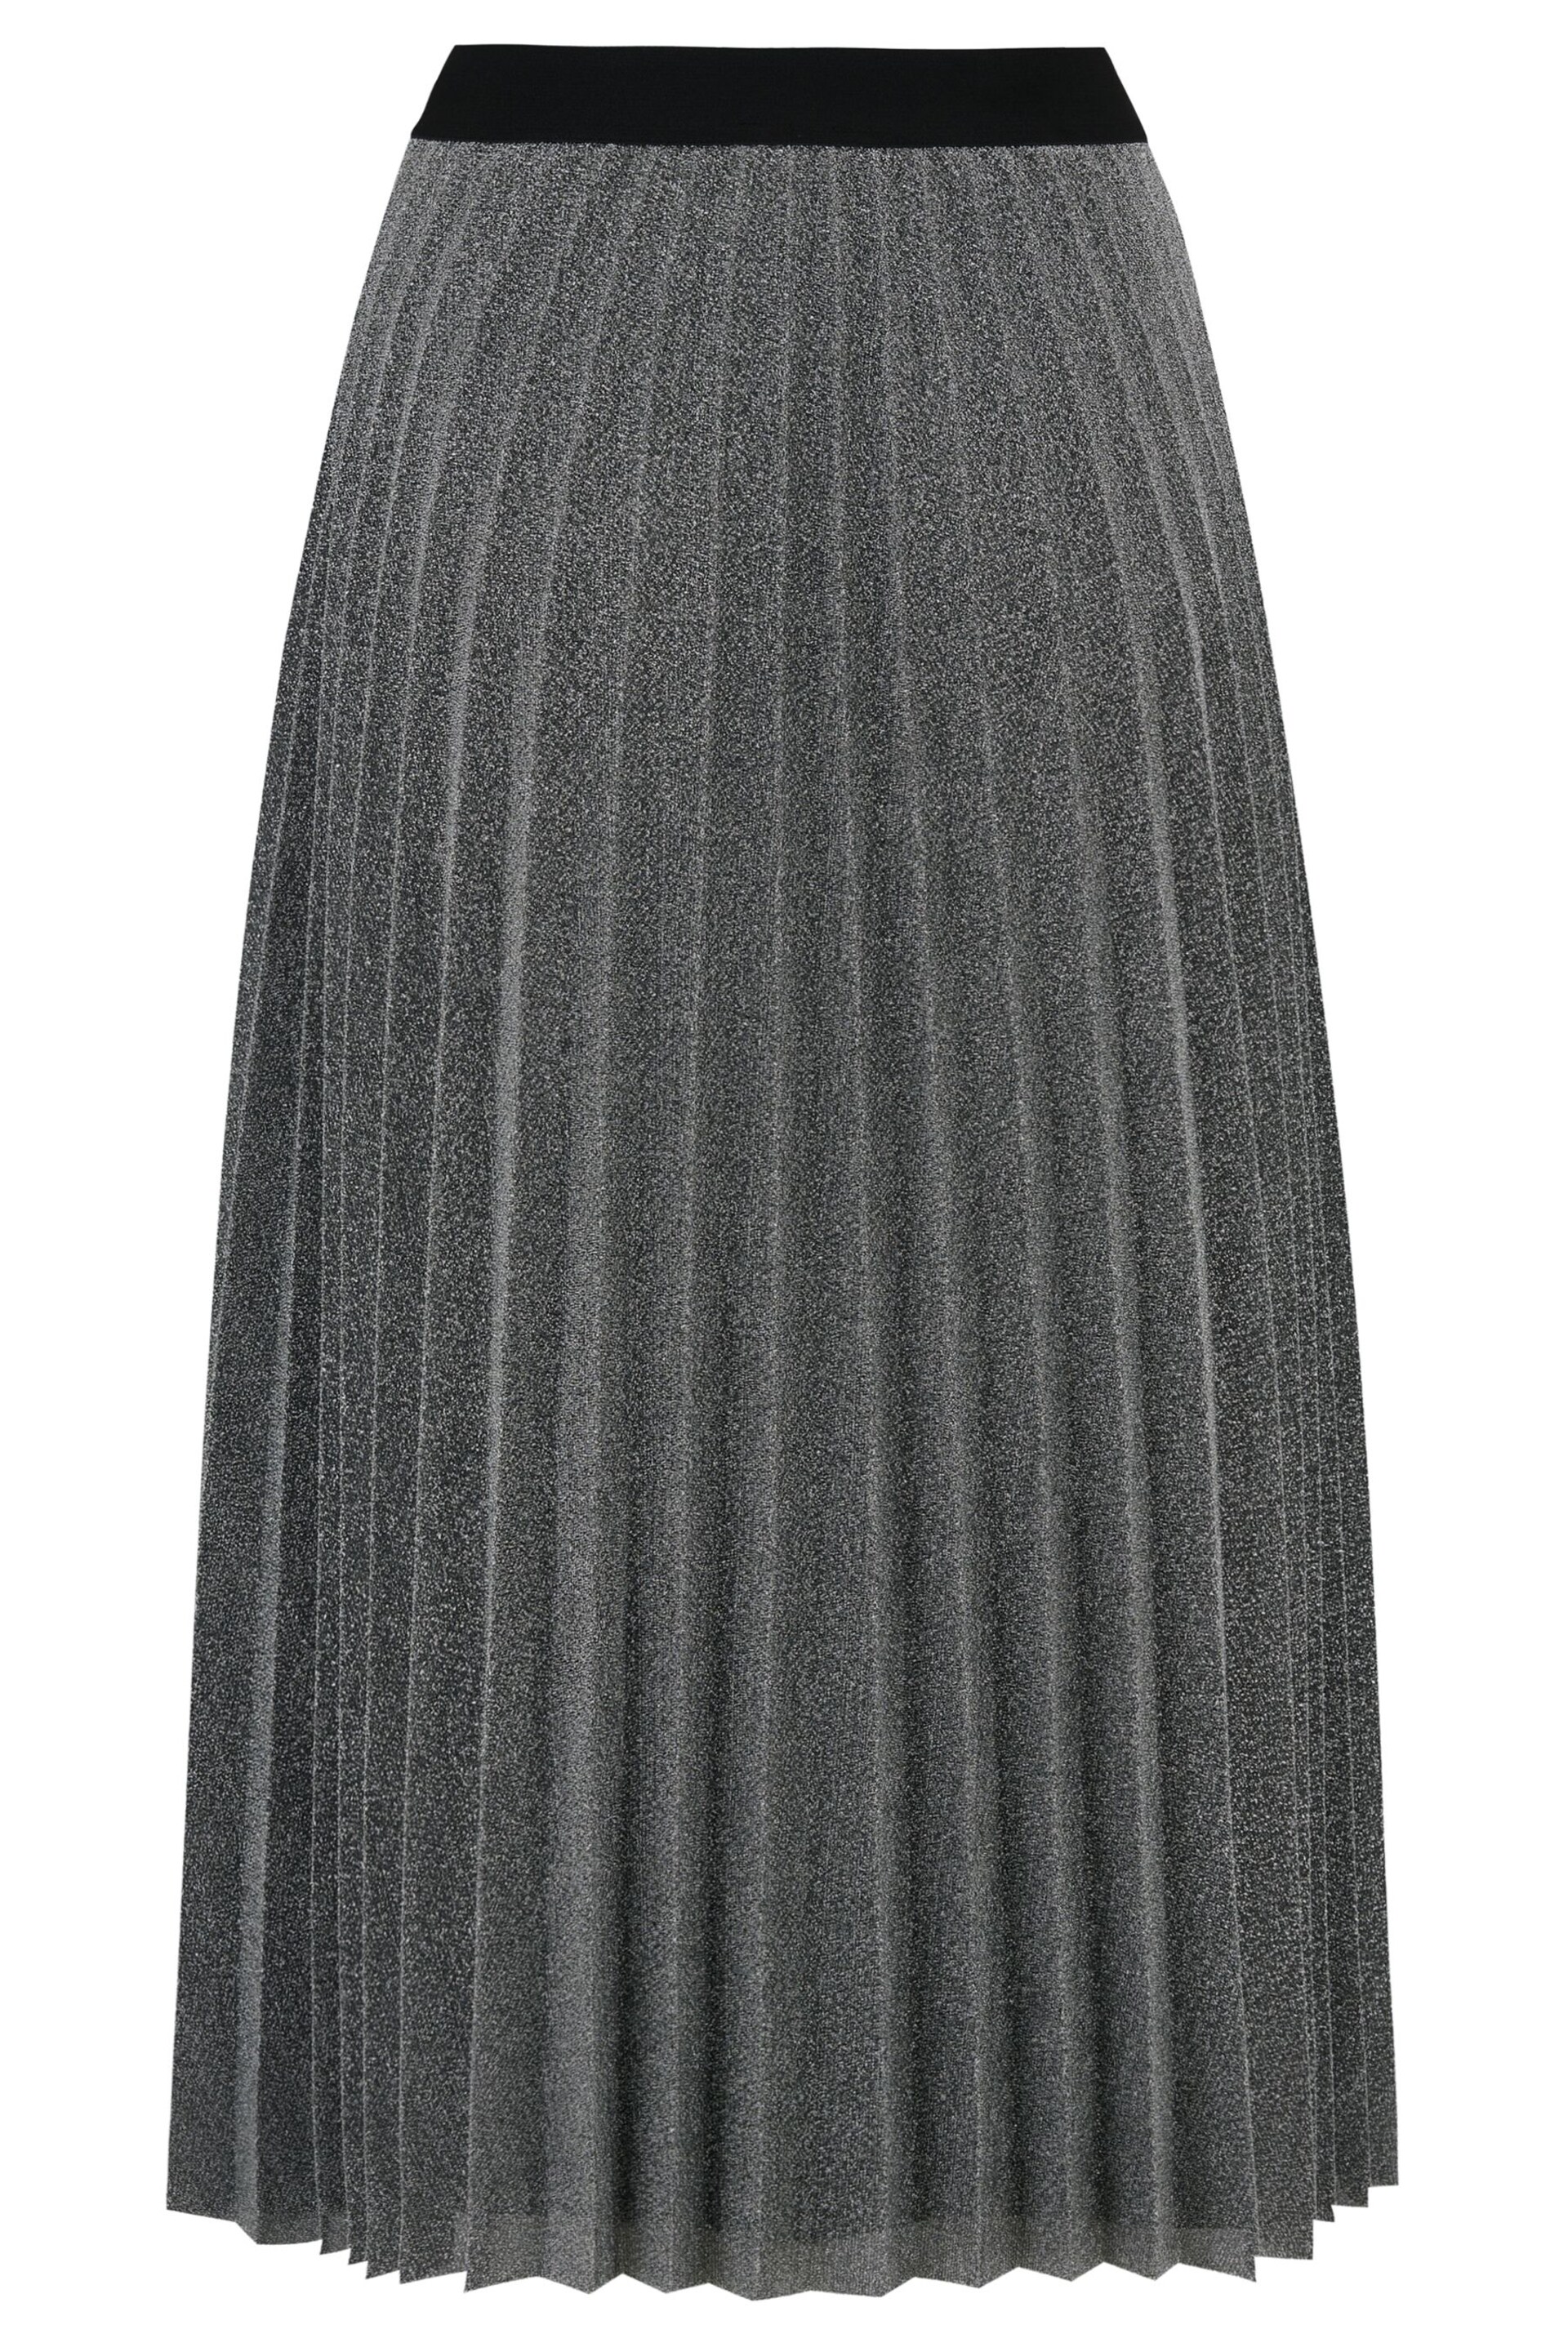 Pour Moi Silver Nina Lame Pleated Midi Skirt - Image 4 of 5